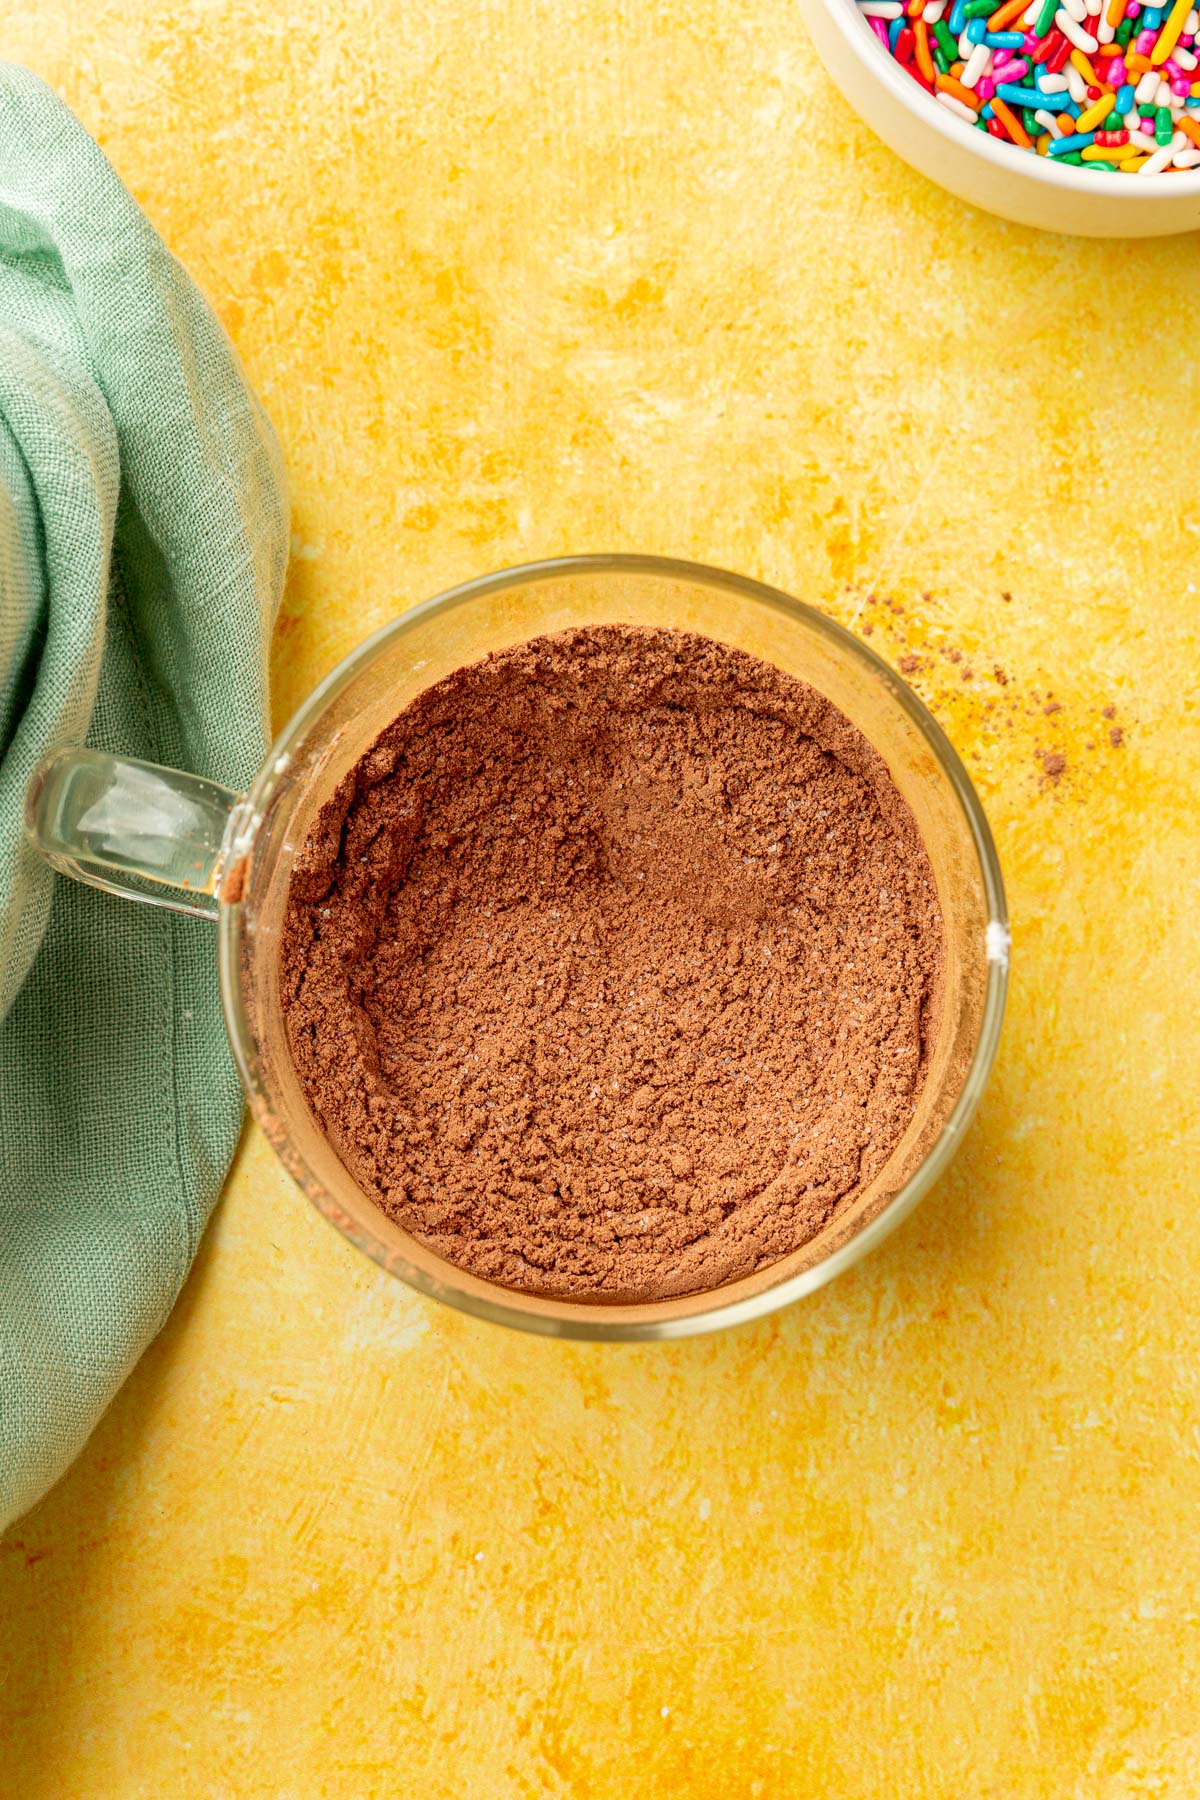 A cocoa powder and gluten-free flour mixture in a glass mug.